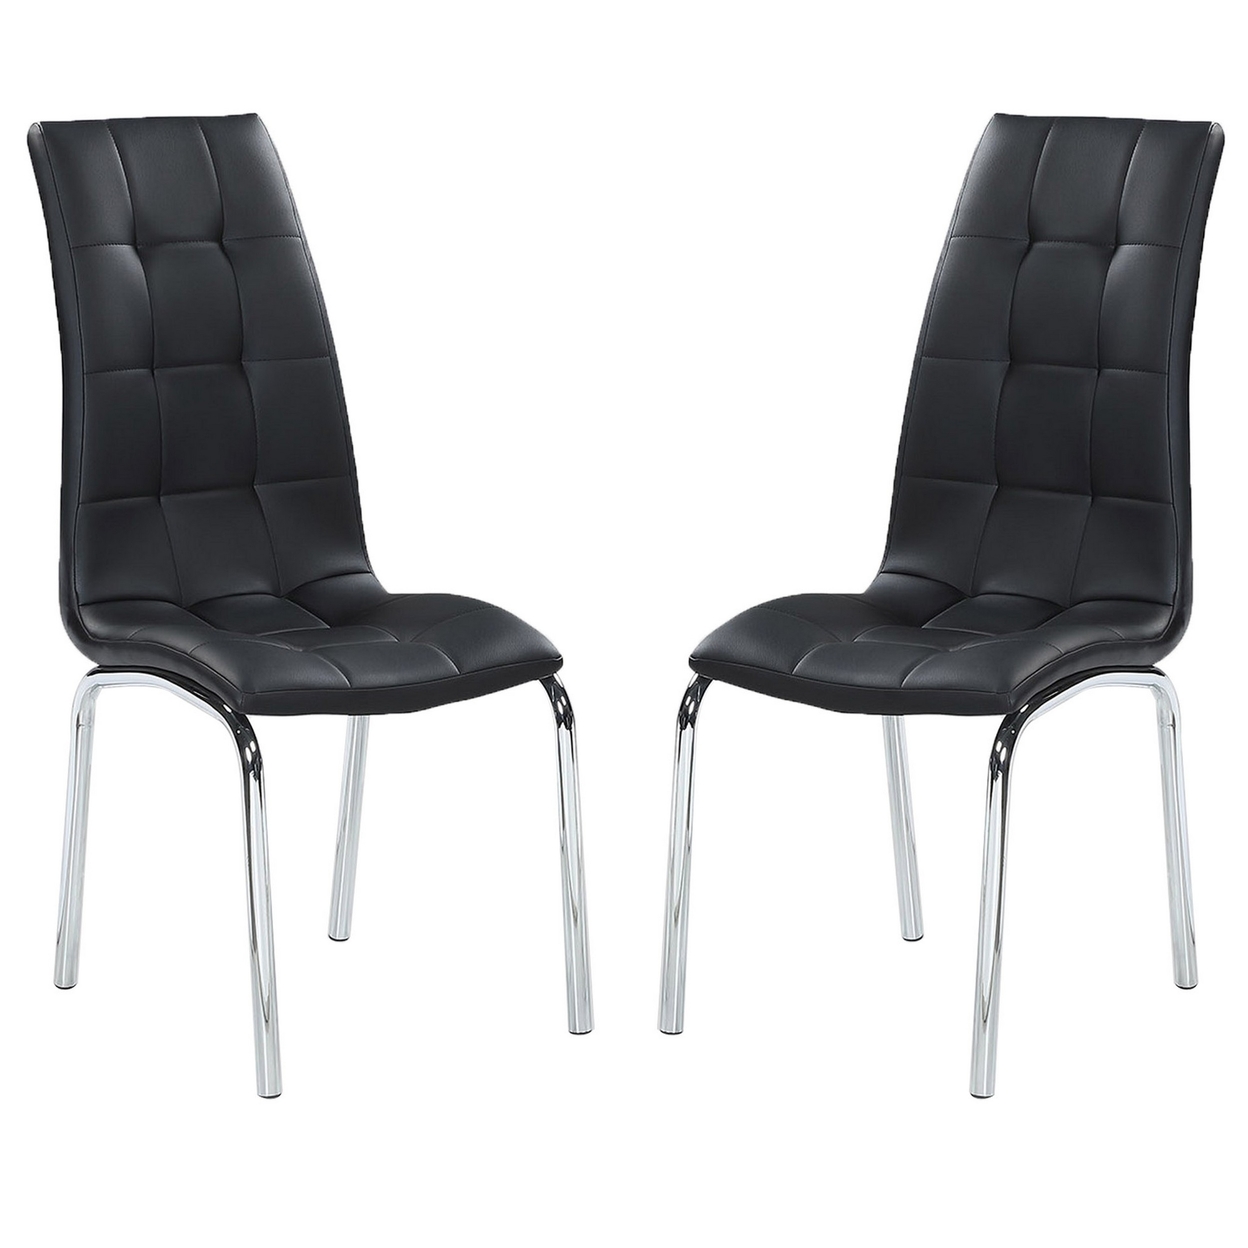 Jolie 18 Inch Side Chair Set Of 4, Metal Legs, Tufted Faux Leather, Black -Saltoro Sherpi